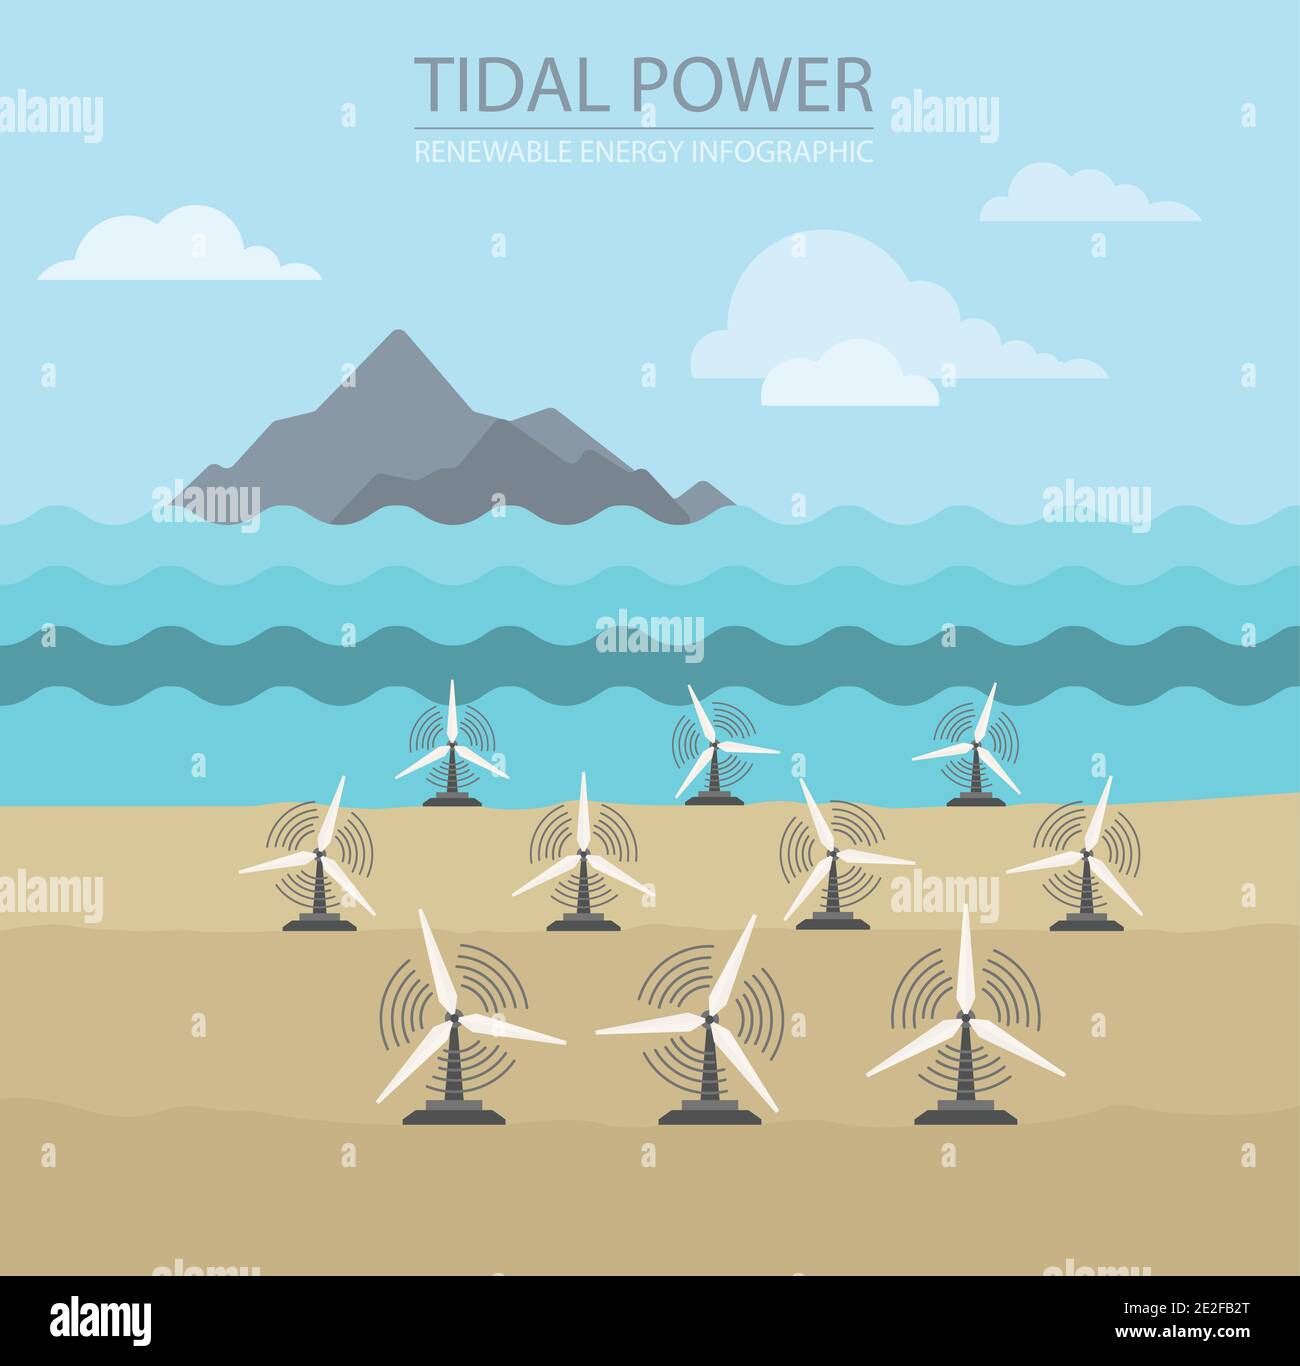 Renewable energy infographic. Tidal power. Global environmental problems. Vector illustration Stock Vector